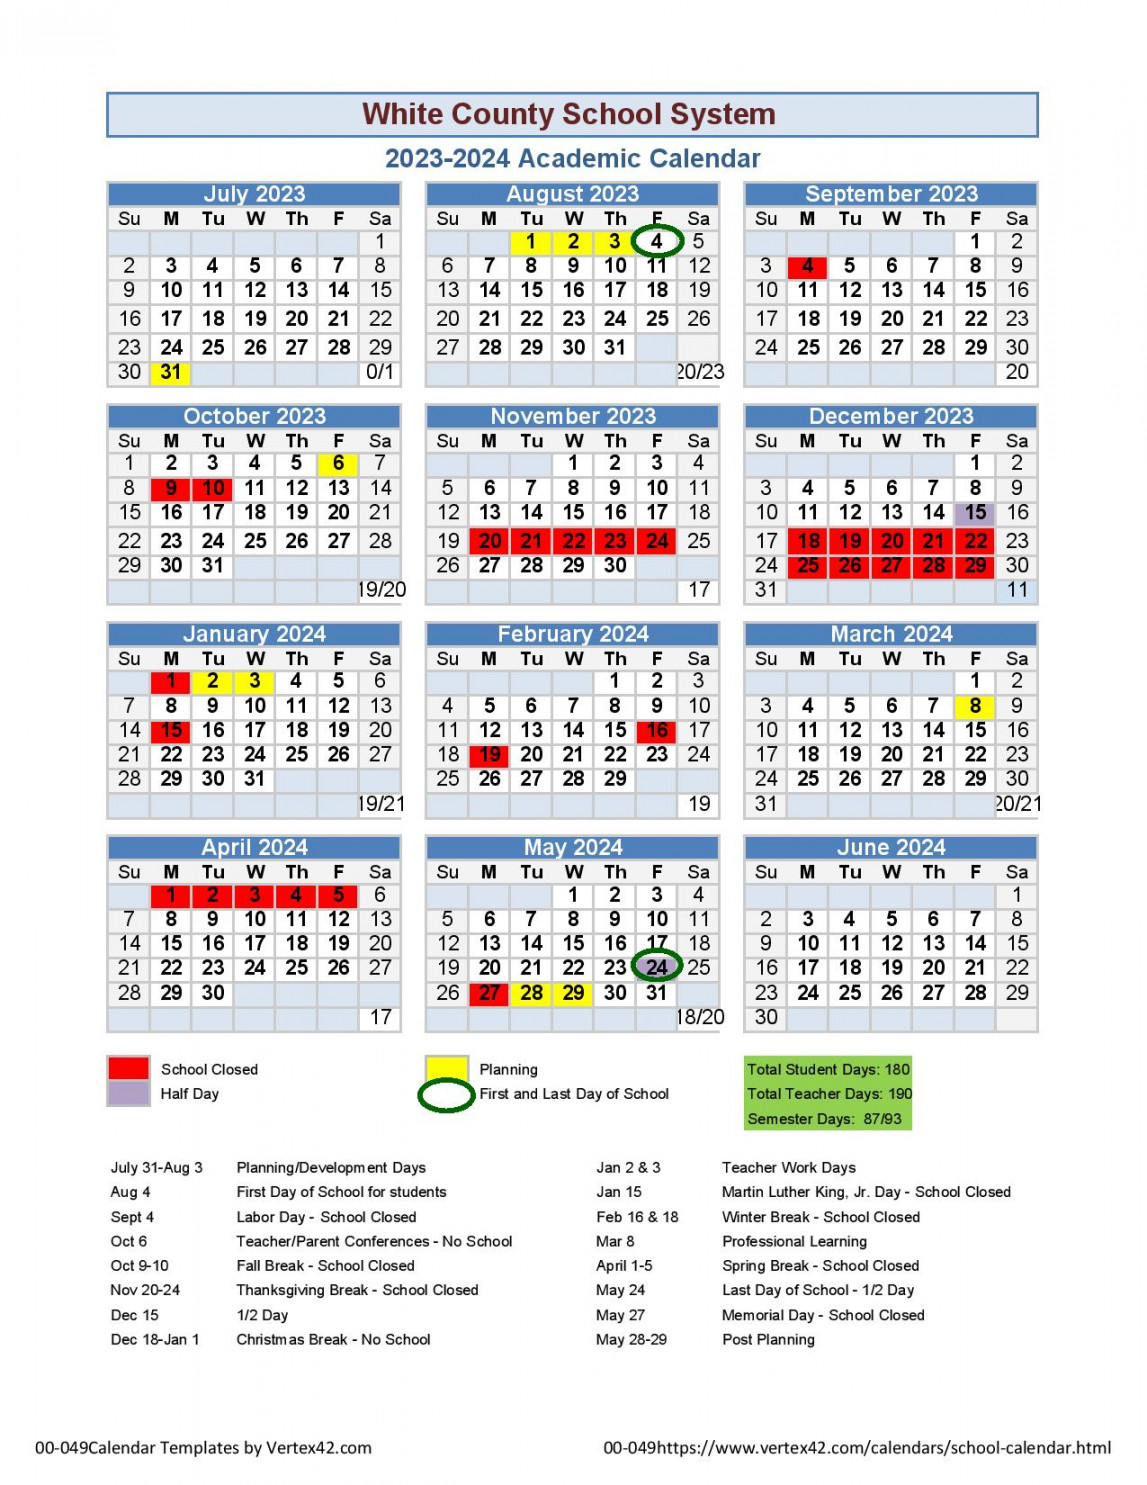 School Calendar - White County School System